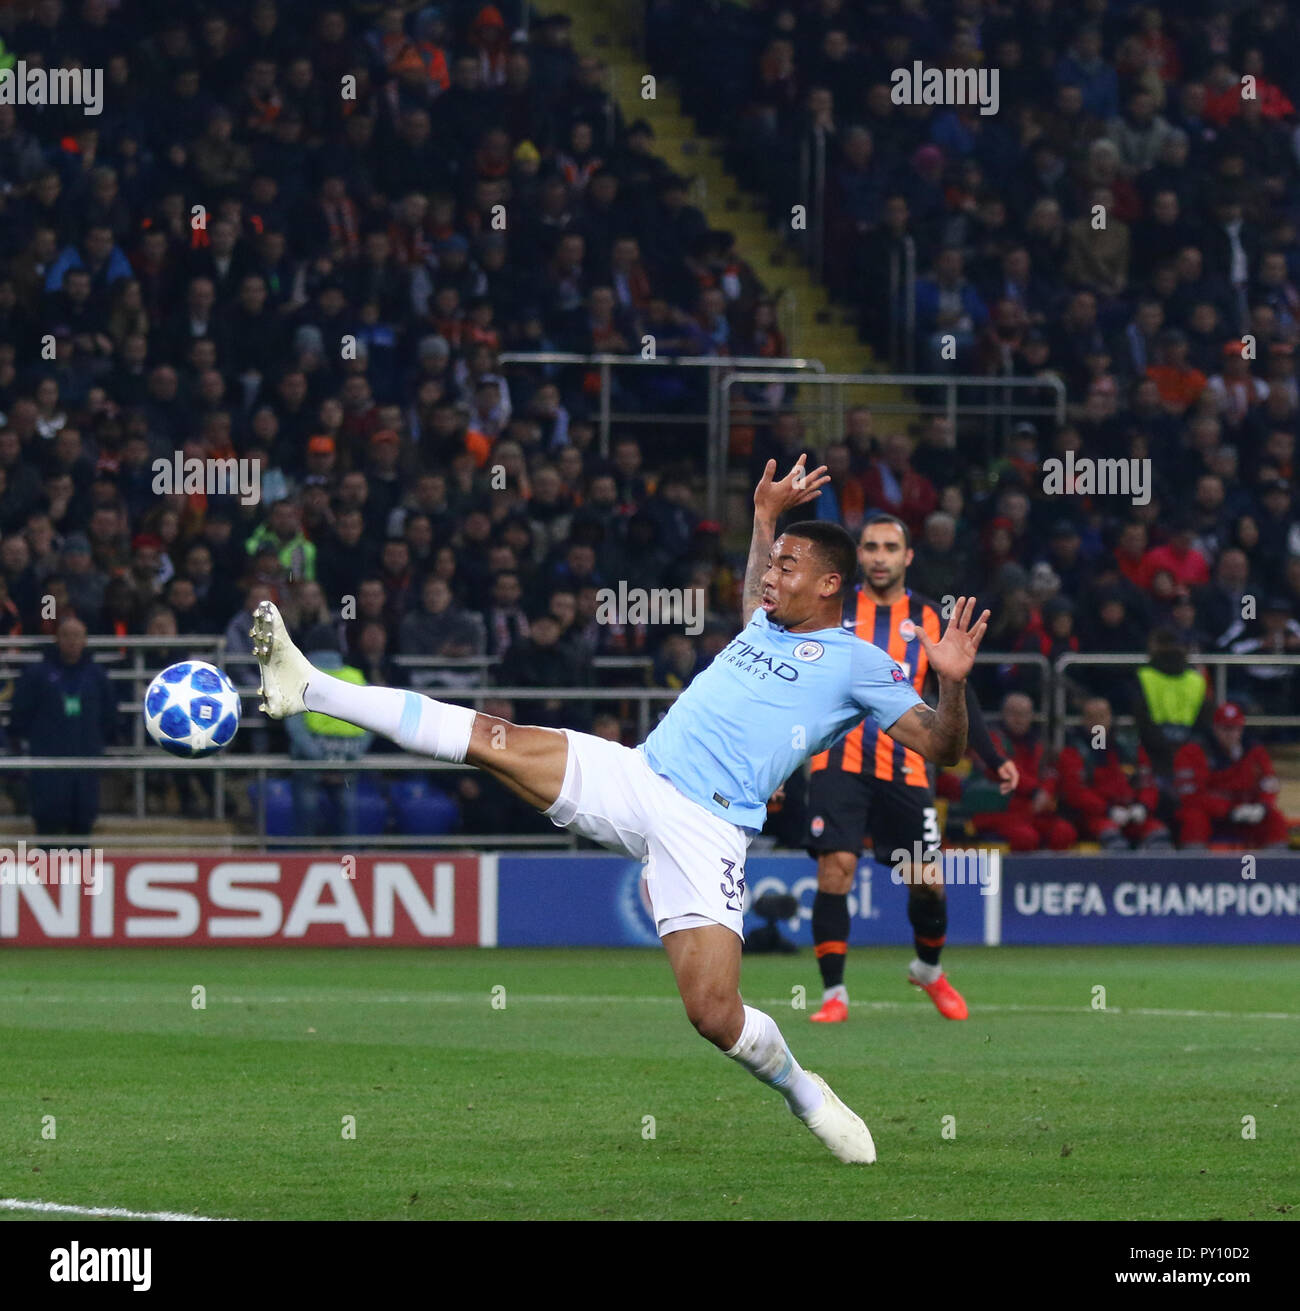 Kharkiv, Ucraina. 23 ottobre, 2018. Gabriel Gesù di Manchester City in azione durante la finale di UEFA Champions League contro Shakhtar Donetsk a OSK Foto Stock